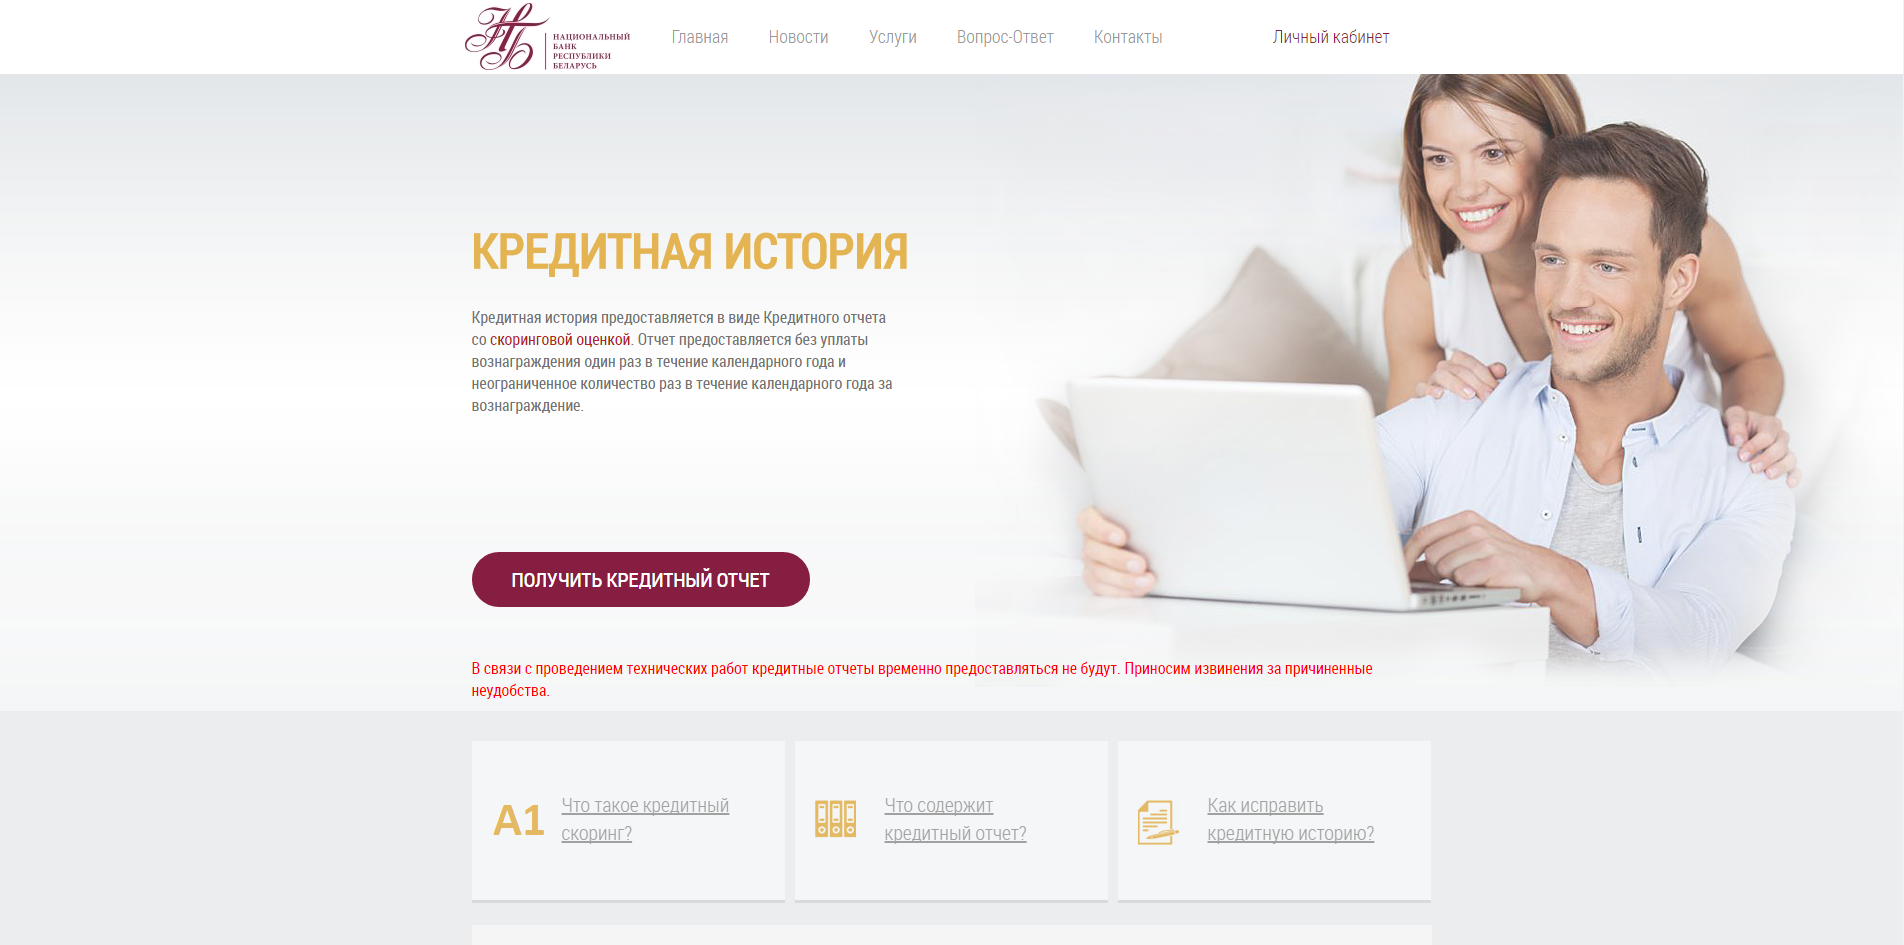 нацбанк кредитная история база данных беларуси онлайн